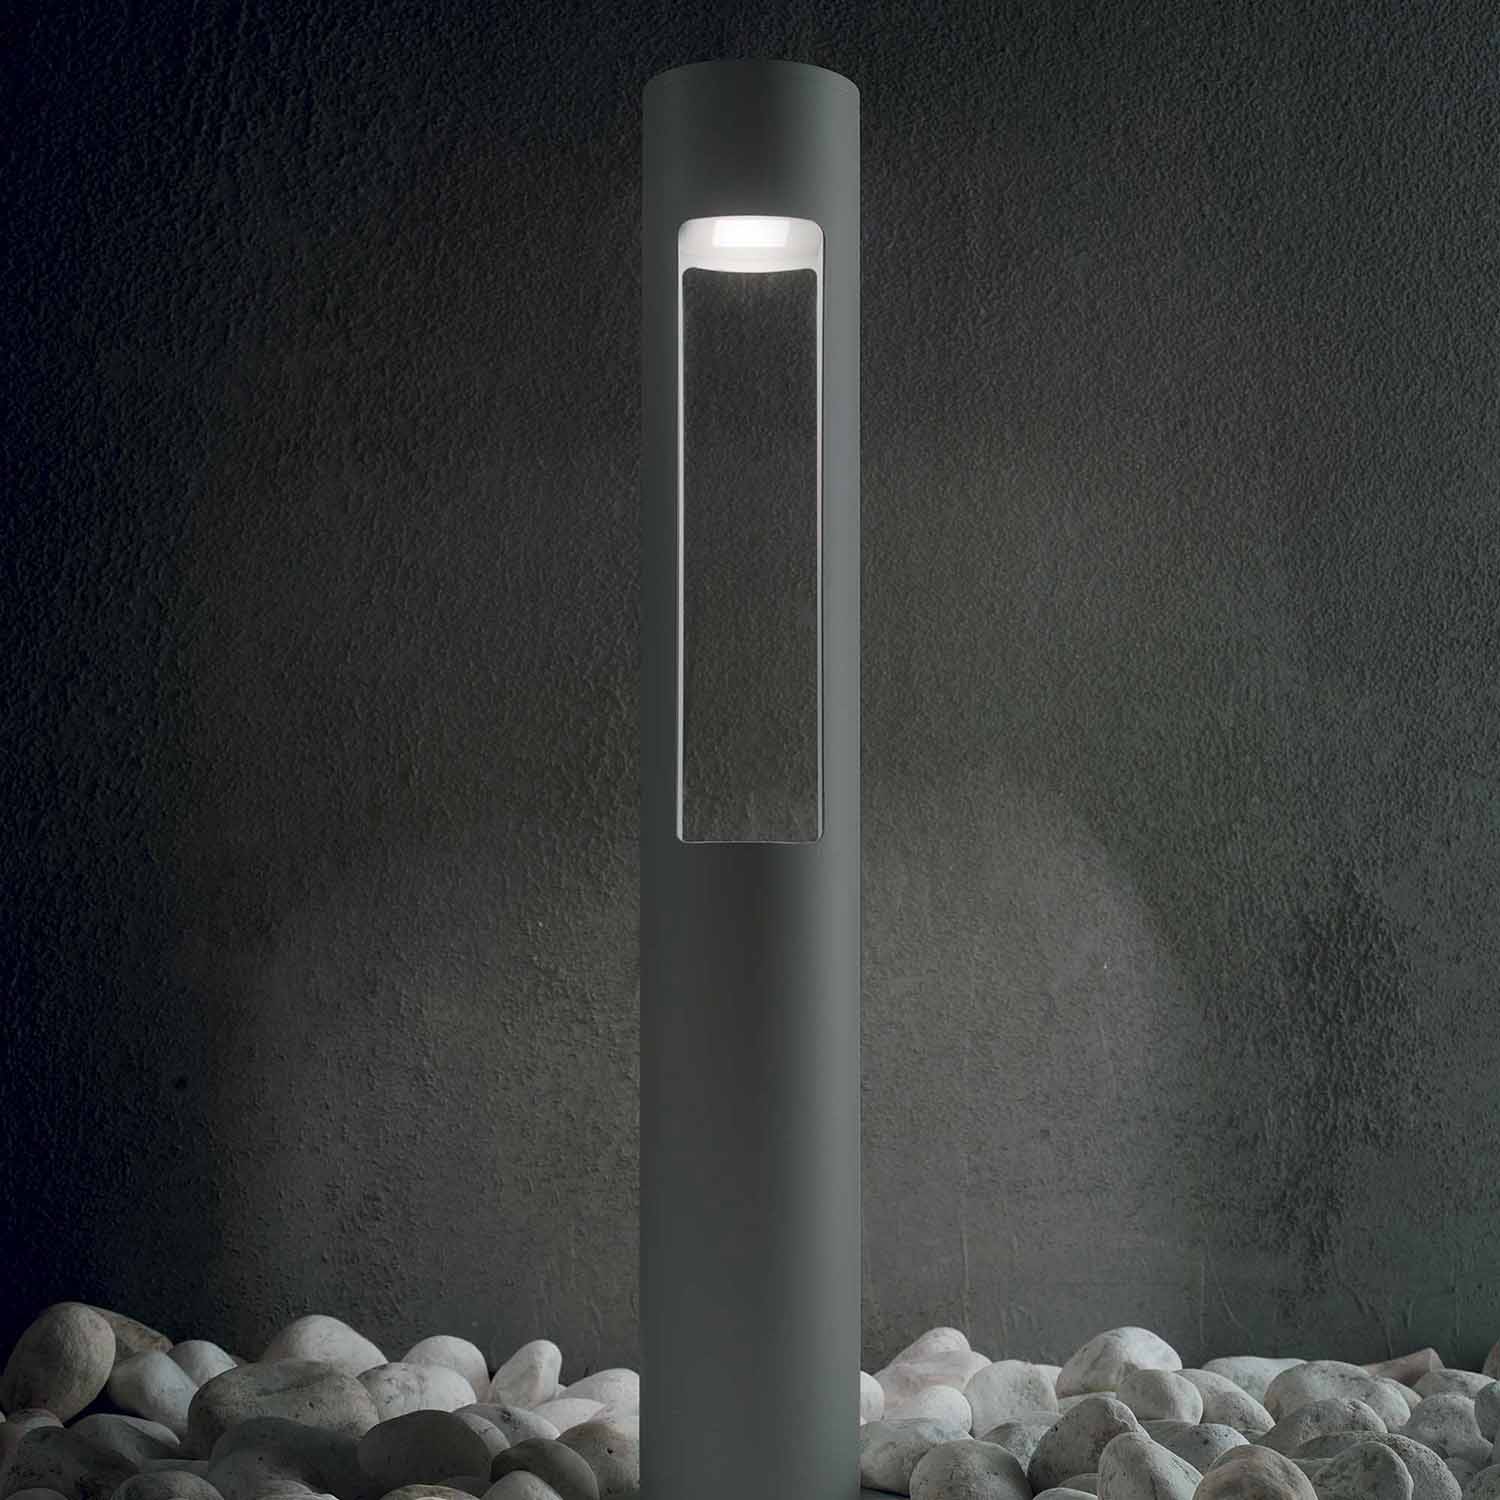 ACQUA - Borne lumineuse design contemporain